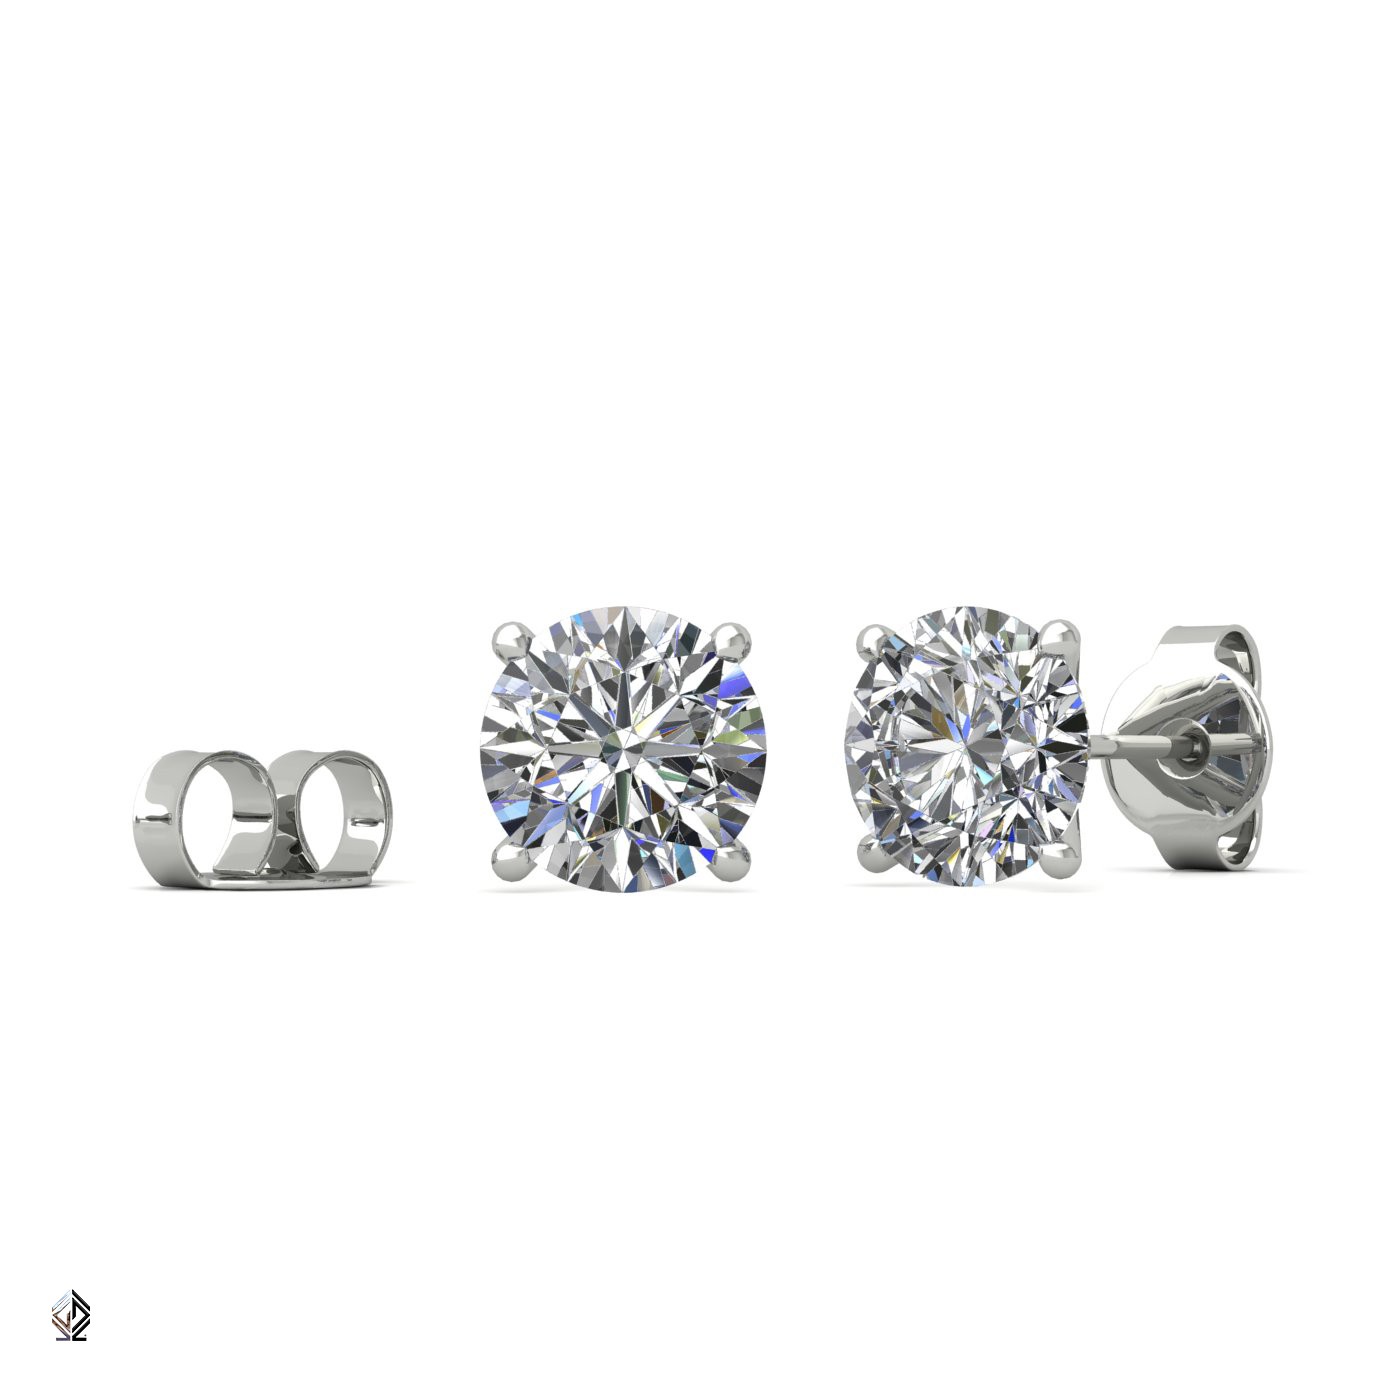 18k white gold 0,7 ct each (1,4 tcw) 4 prongs round cut classic diamond earring studs